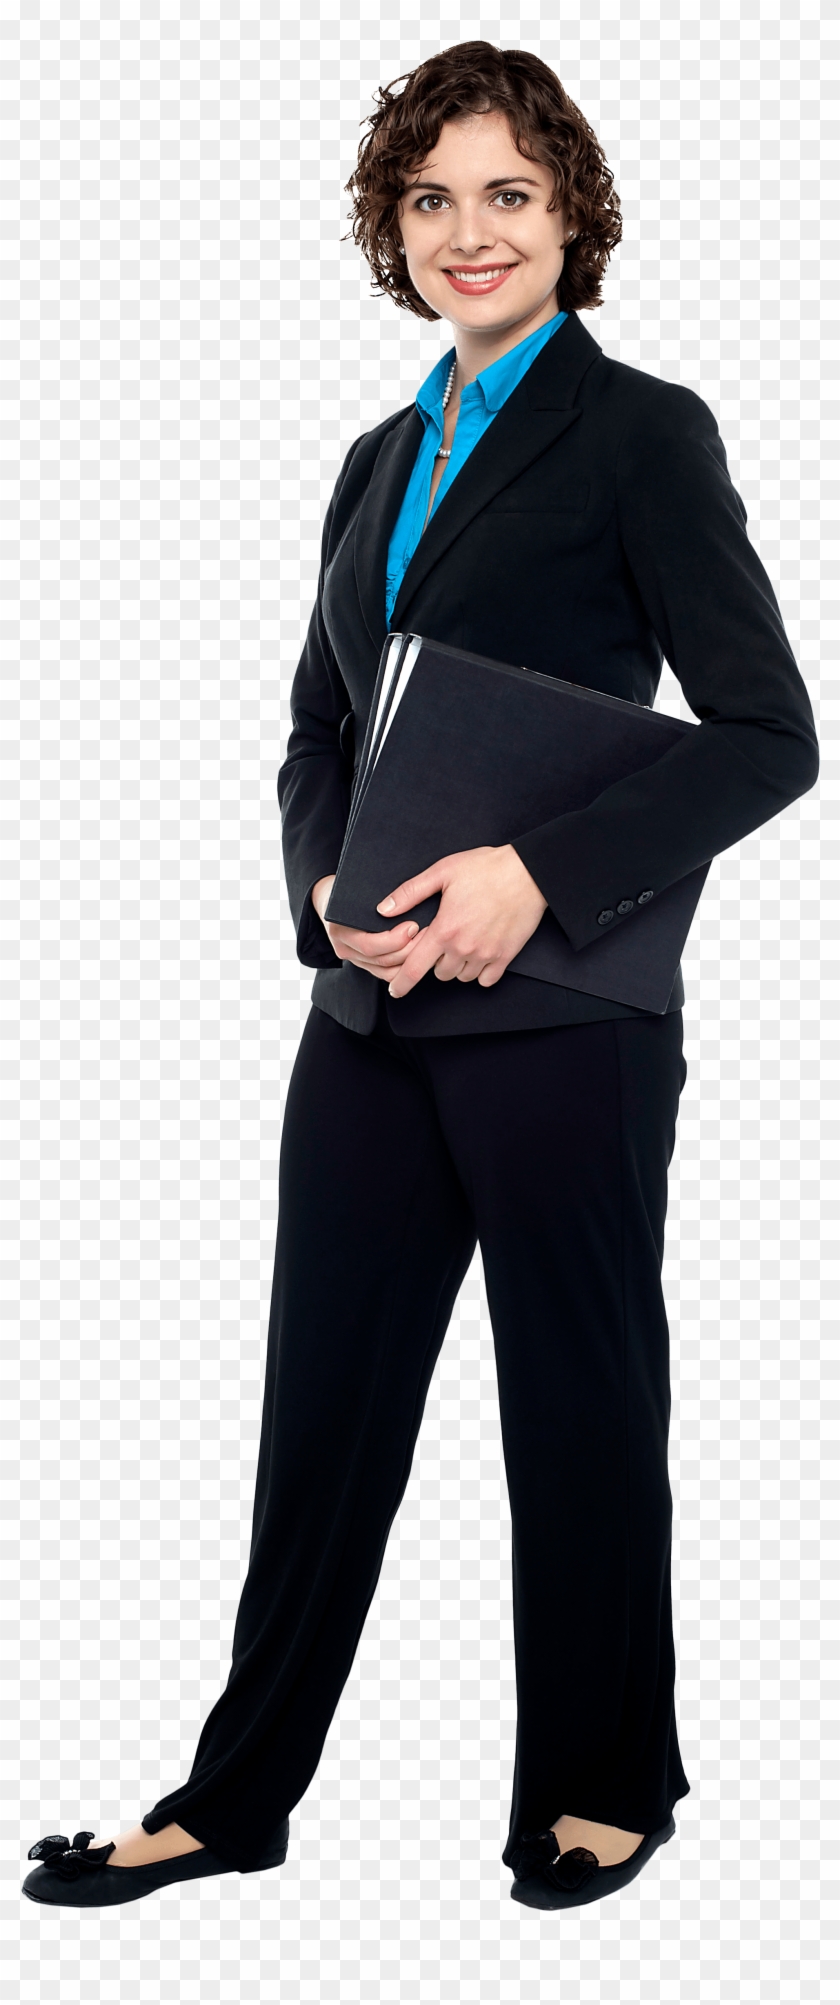 Transparent Background Woman Business Suit - Business Woman No Background Clipart